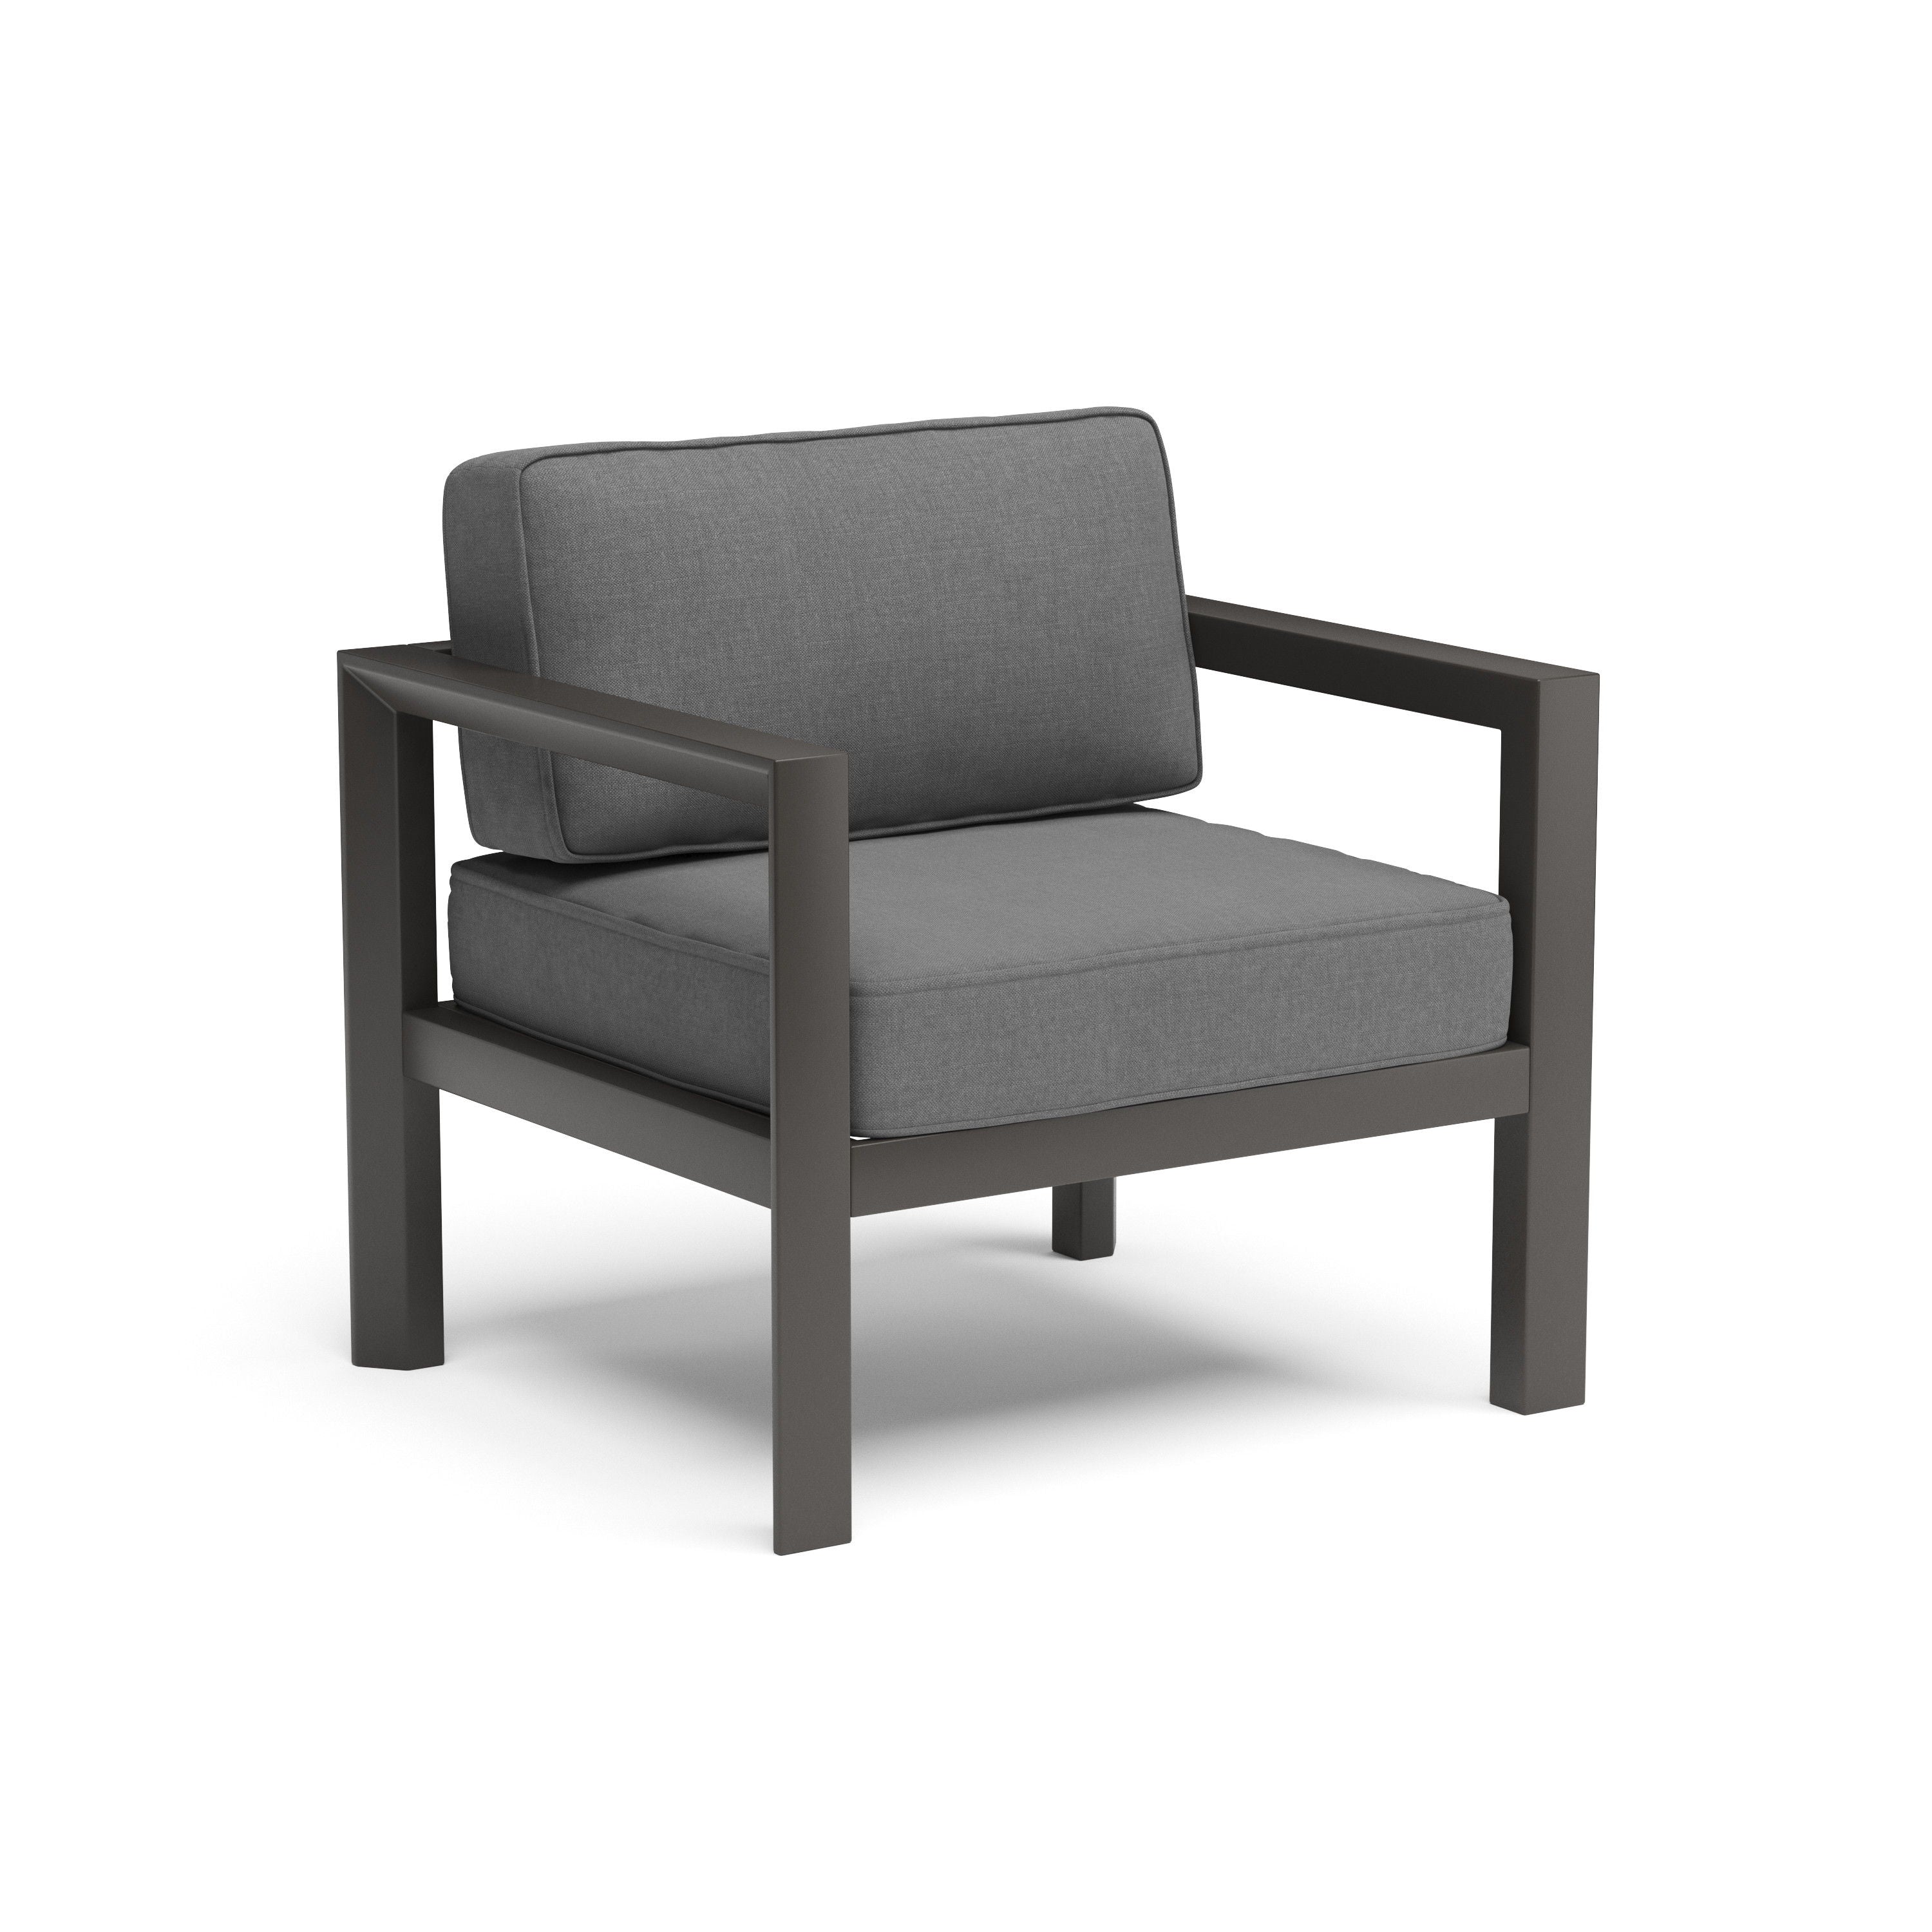 Grayton - Outdoor Aluminum Lounge Chair - Gray, Dark - 25.5